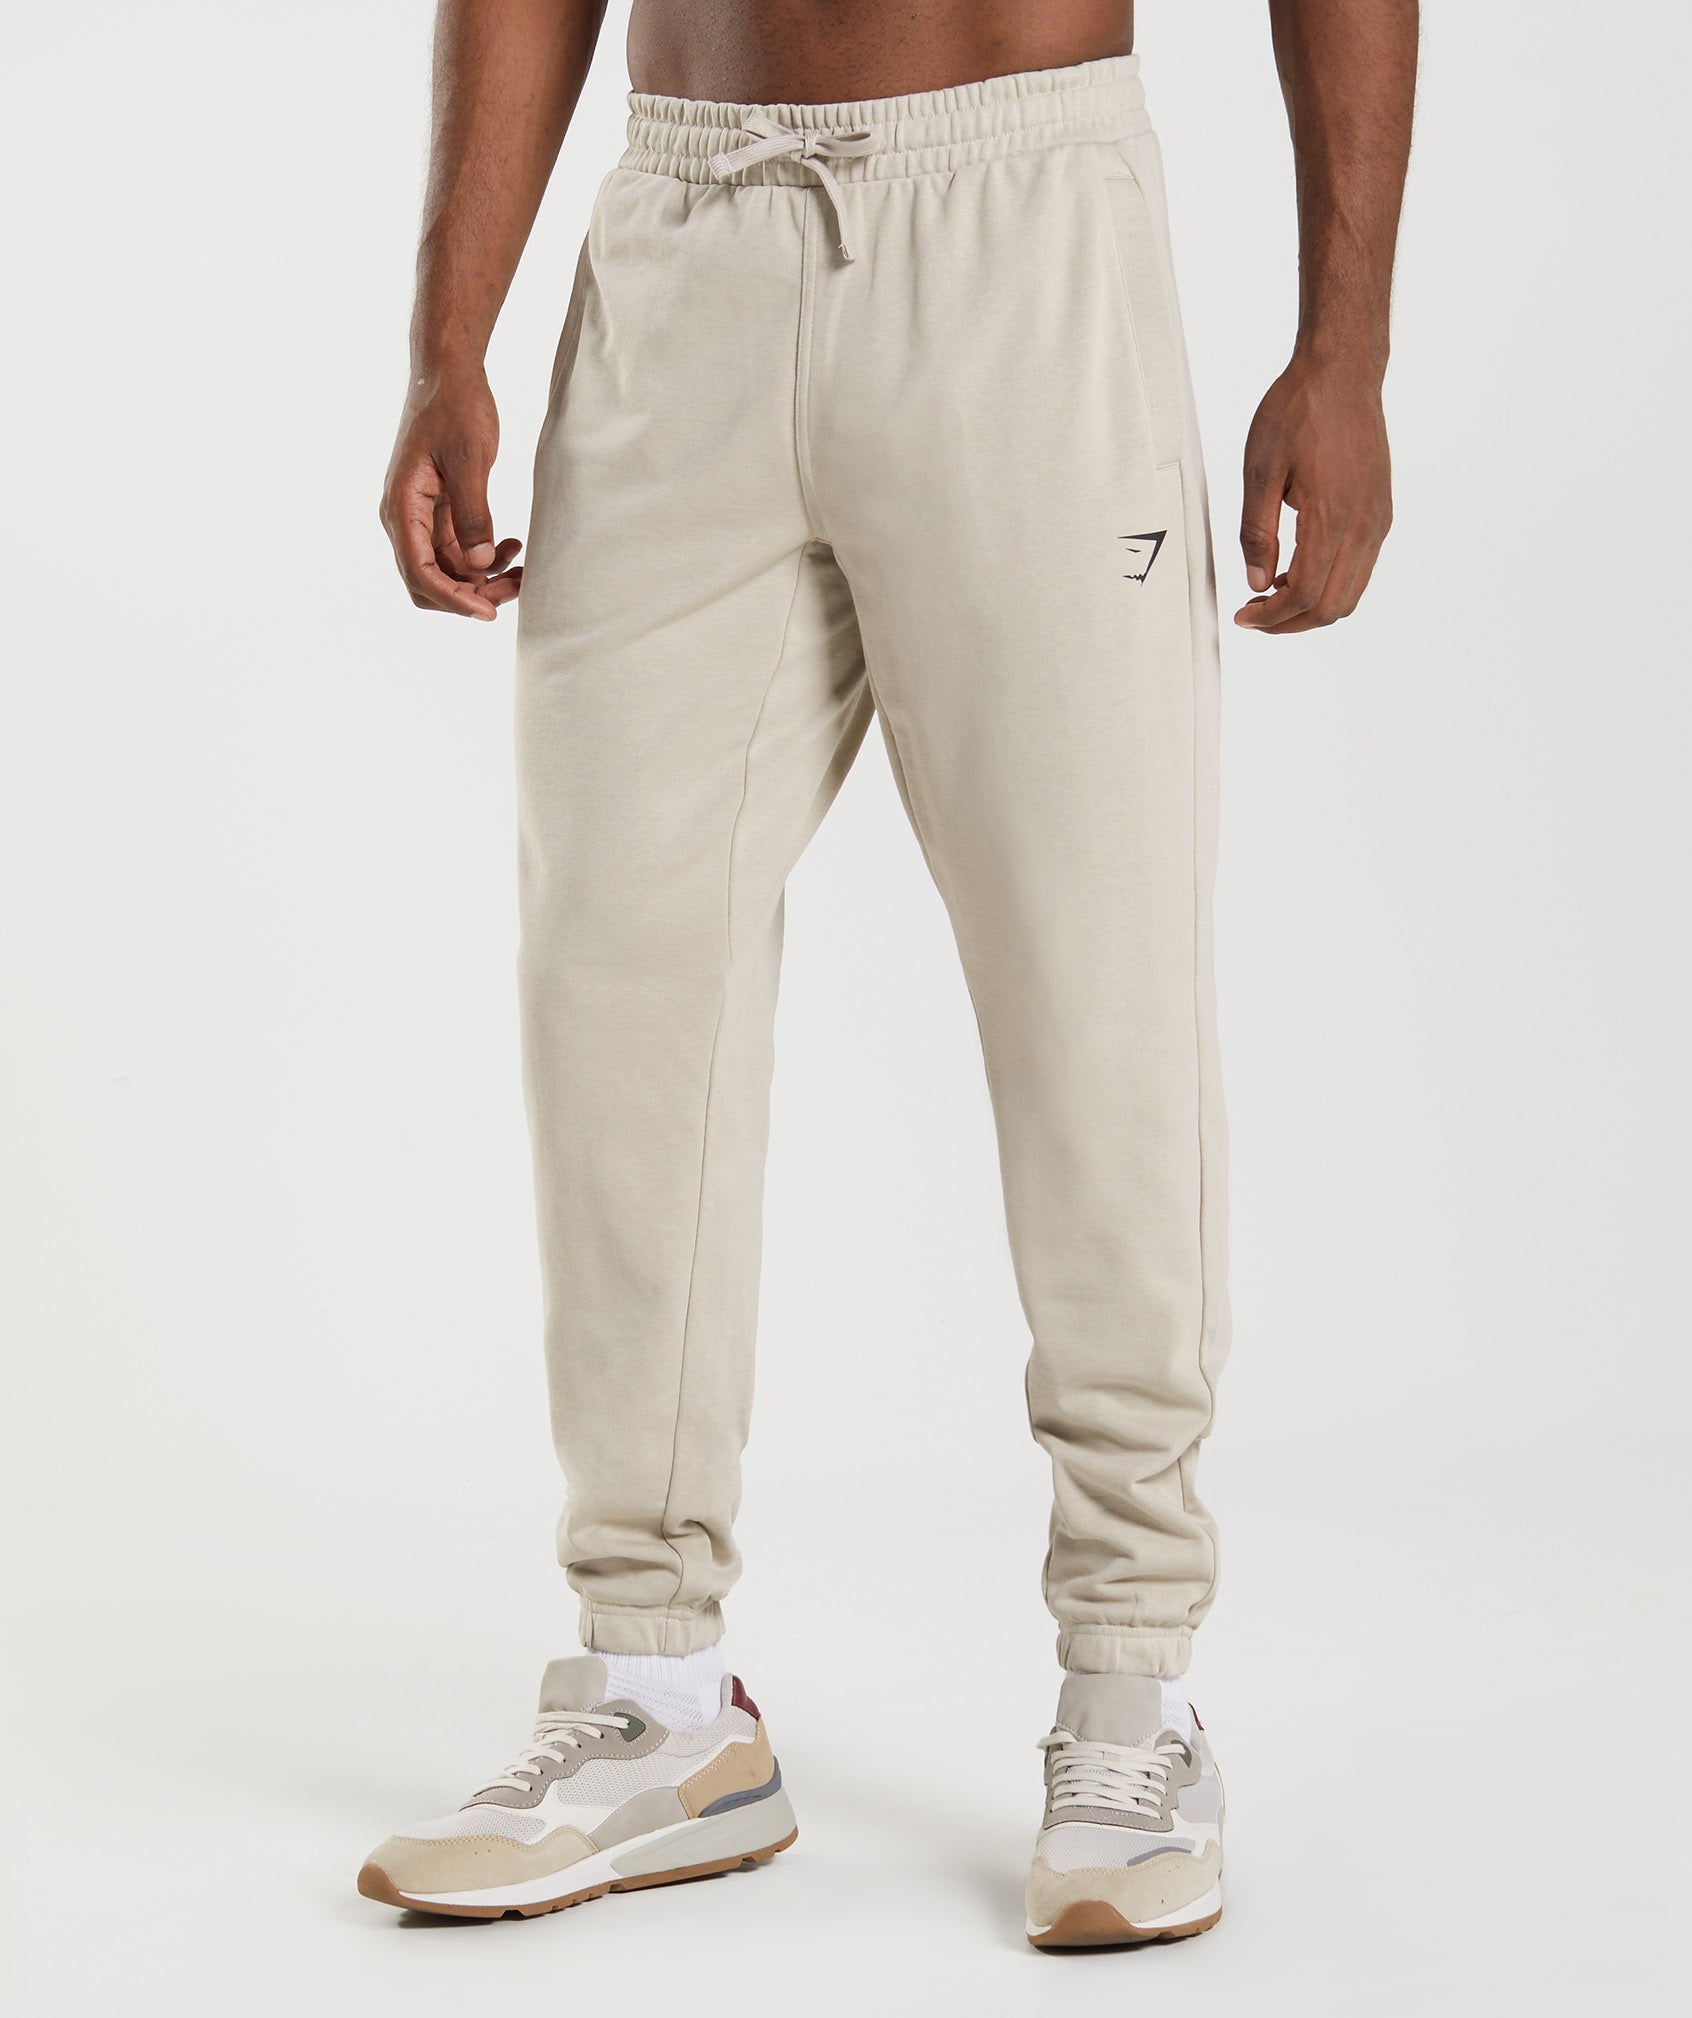 Gymshark Men's Crest Joggers Sweatpants in Light Grey Slim Fit